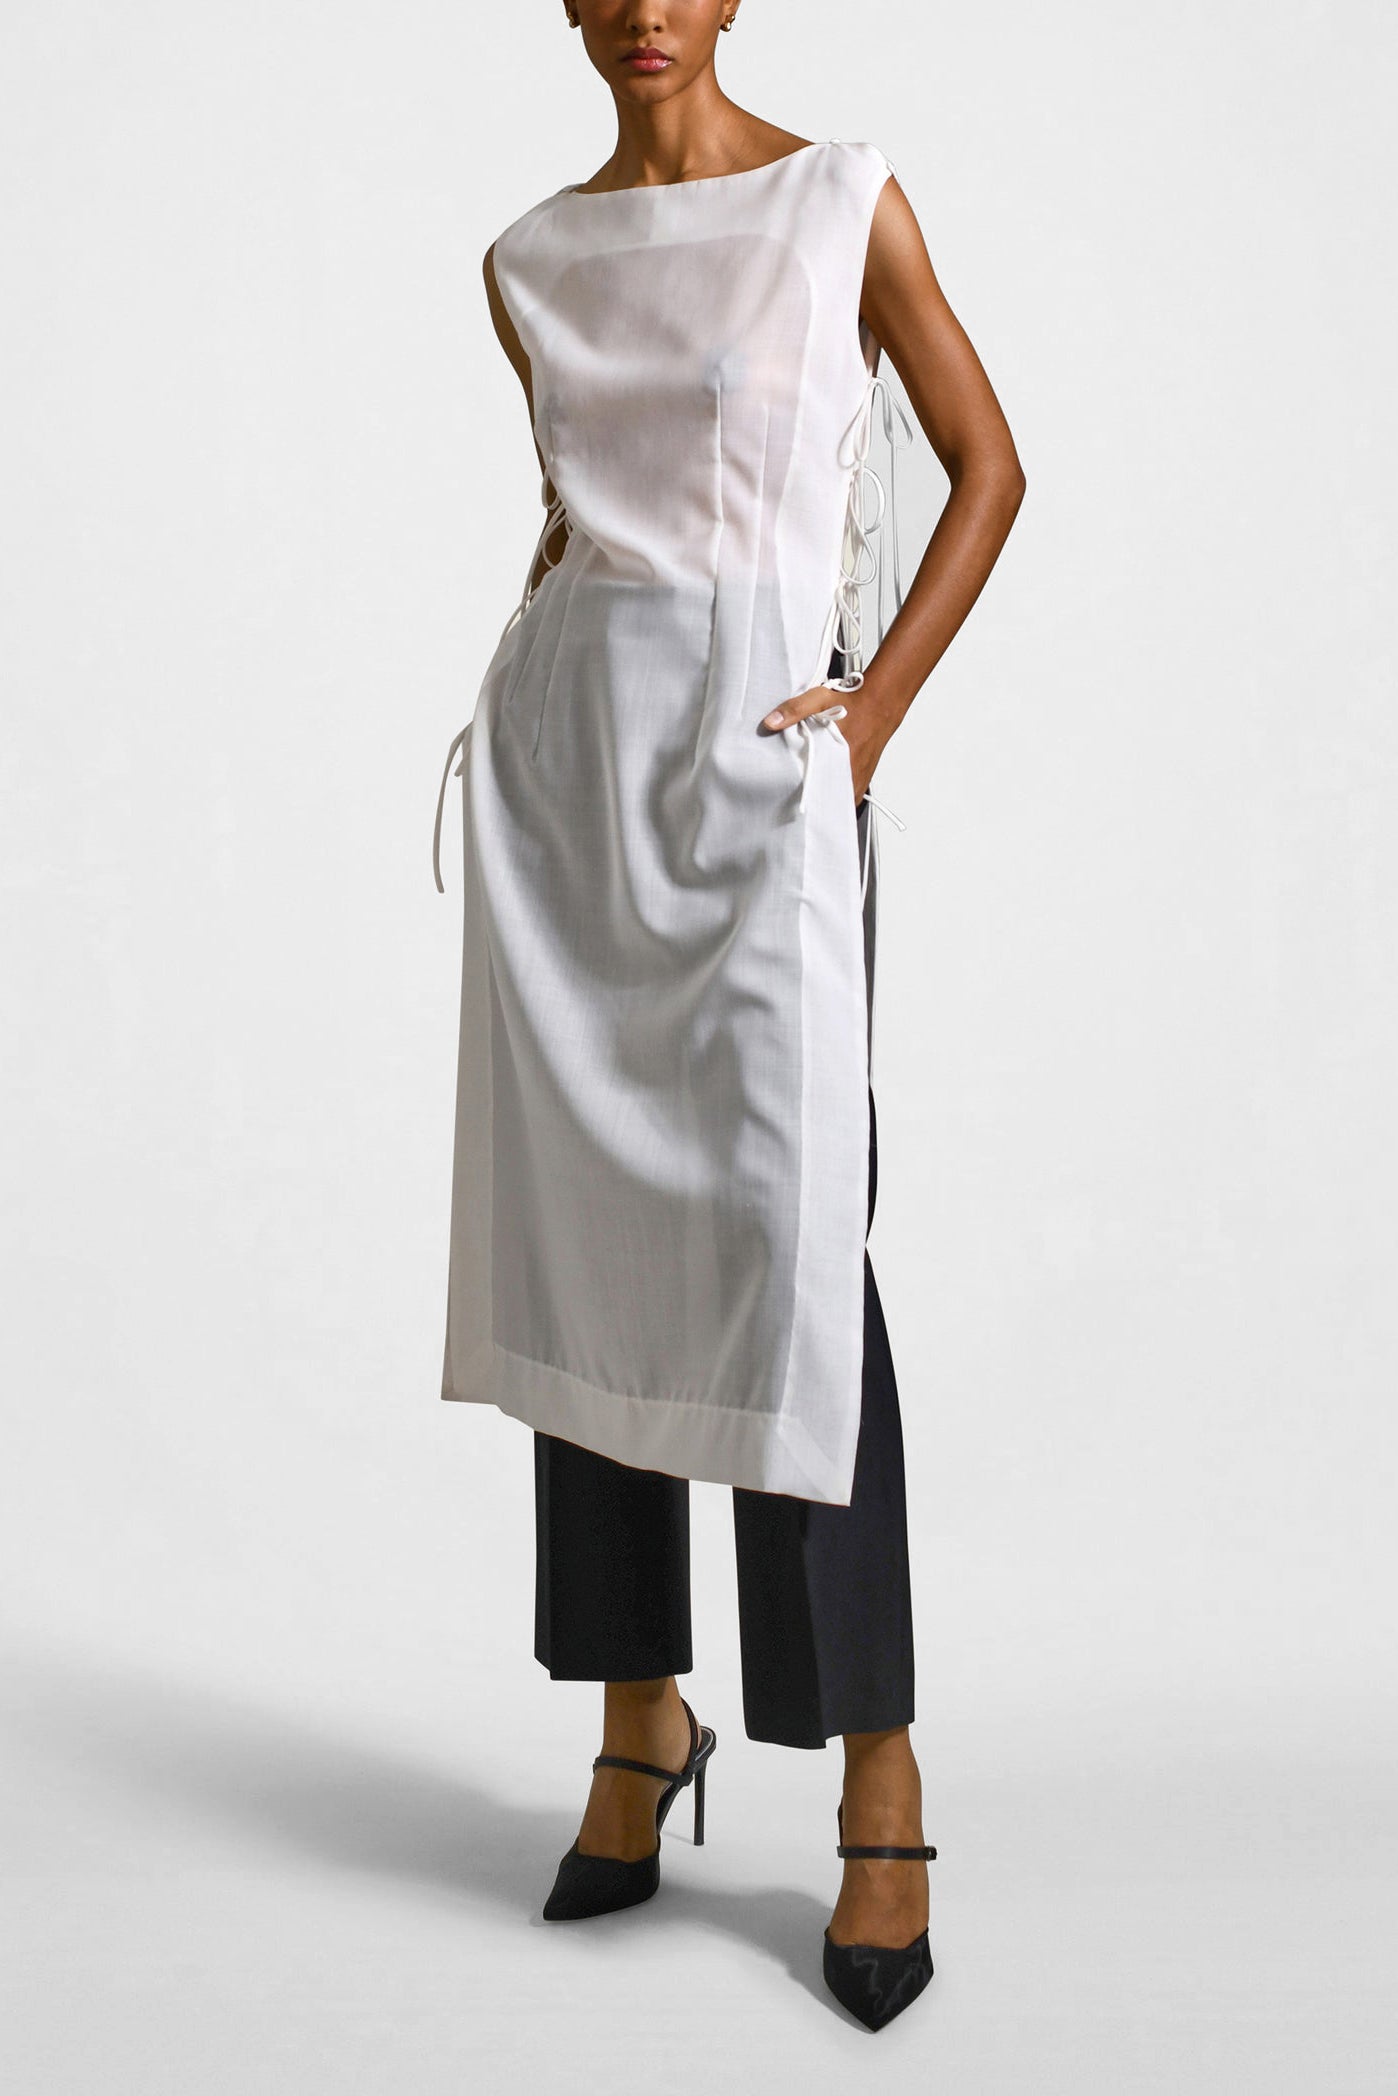 Elizabeth Vest Dress in Summer Wool Voile by Kallmeyer